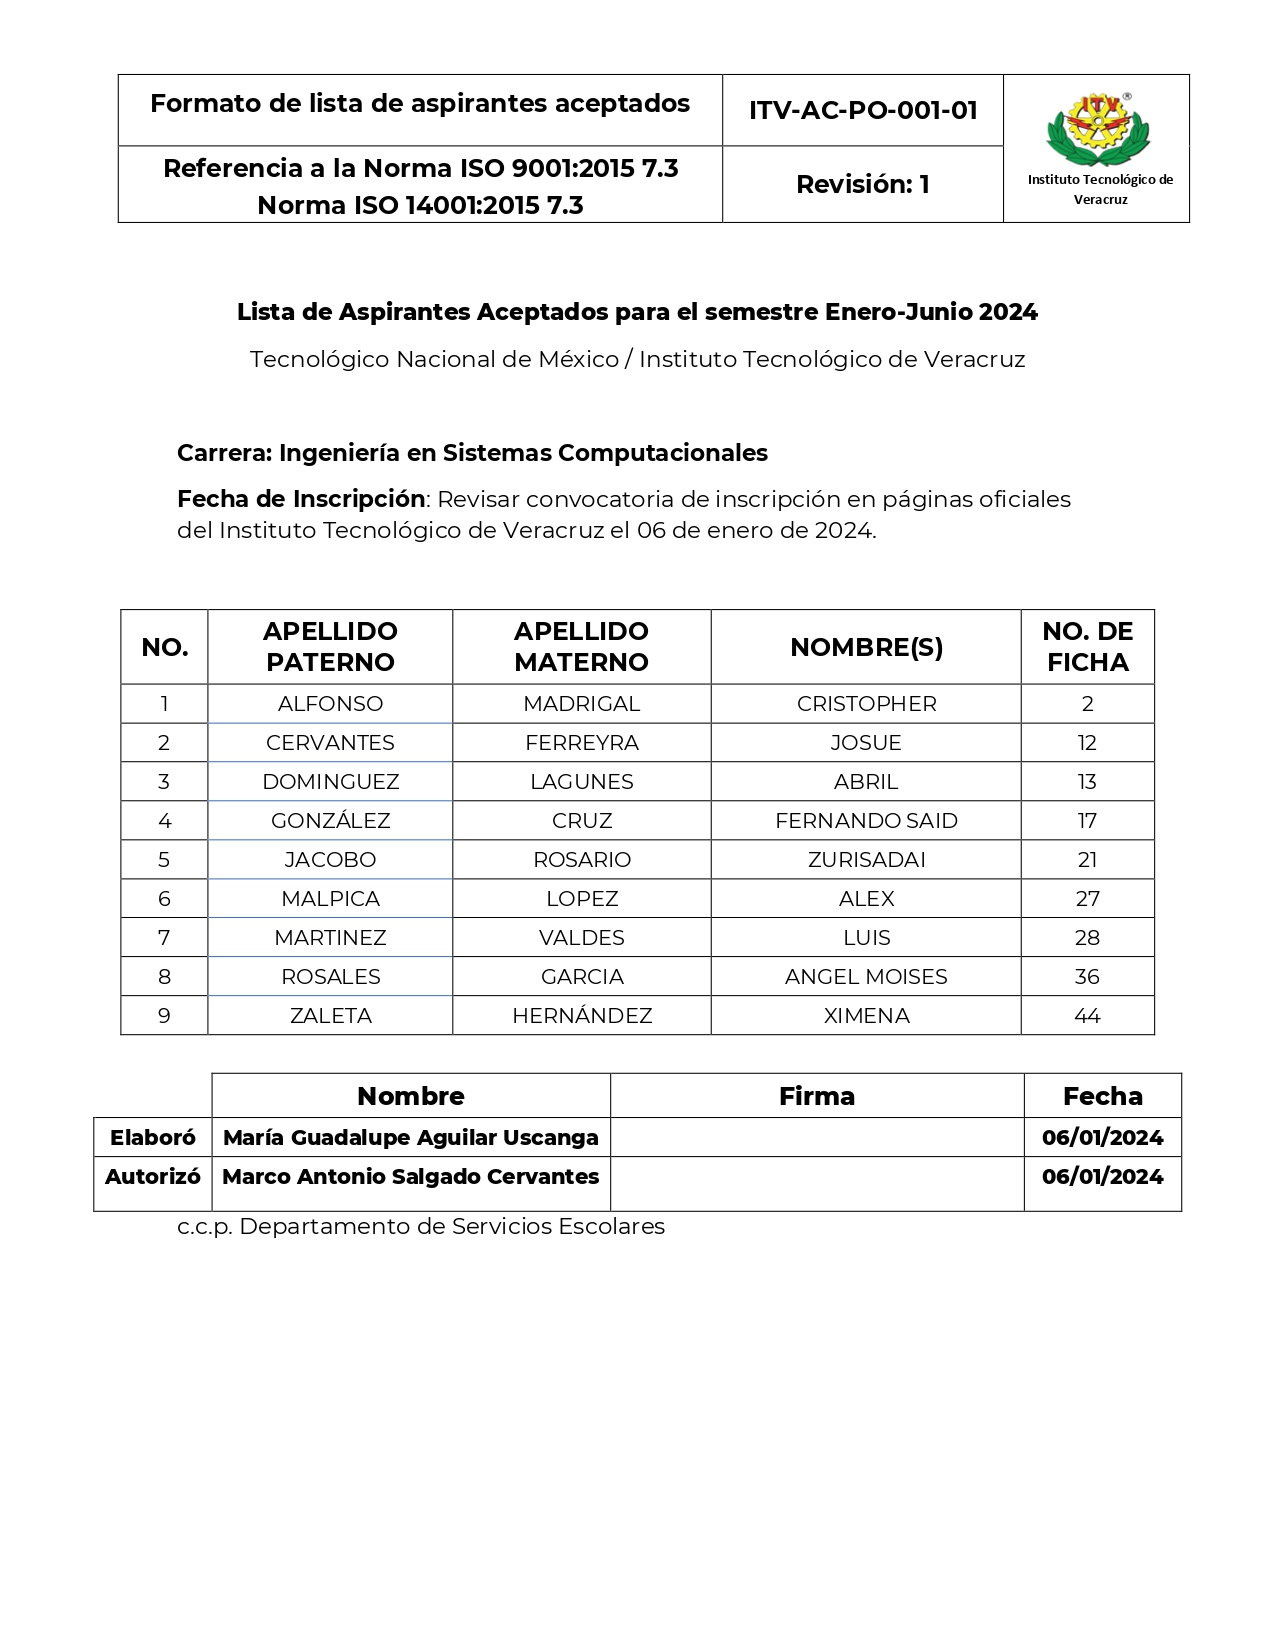 Lista_de_Aspirantes_Aceptados_por_Examen_page-0005.jpg